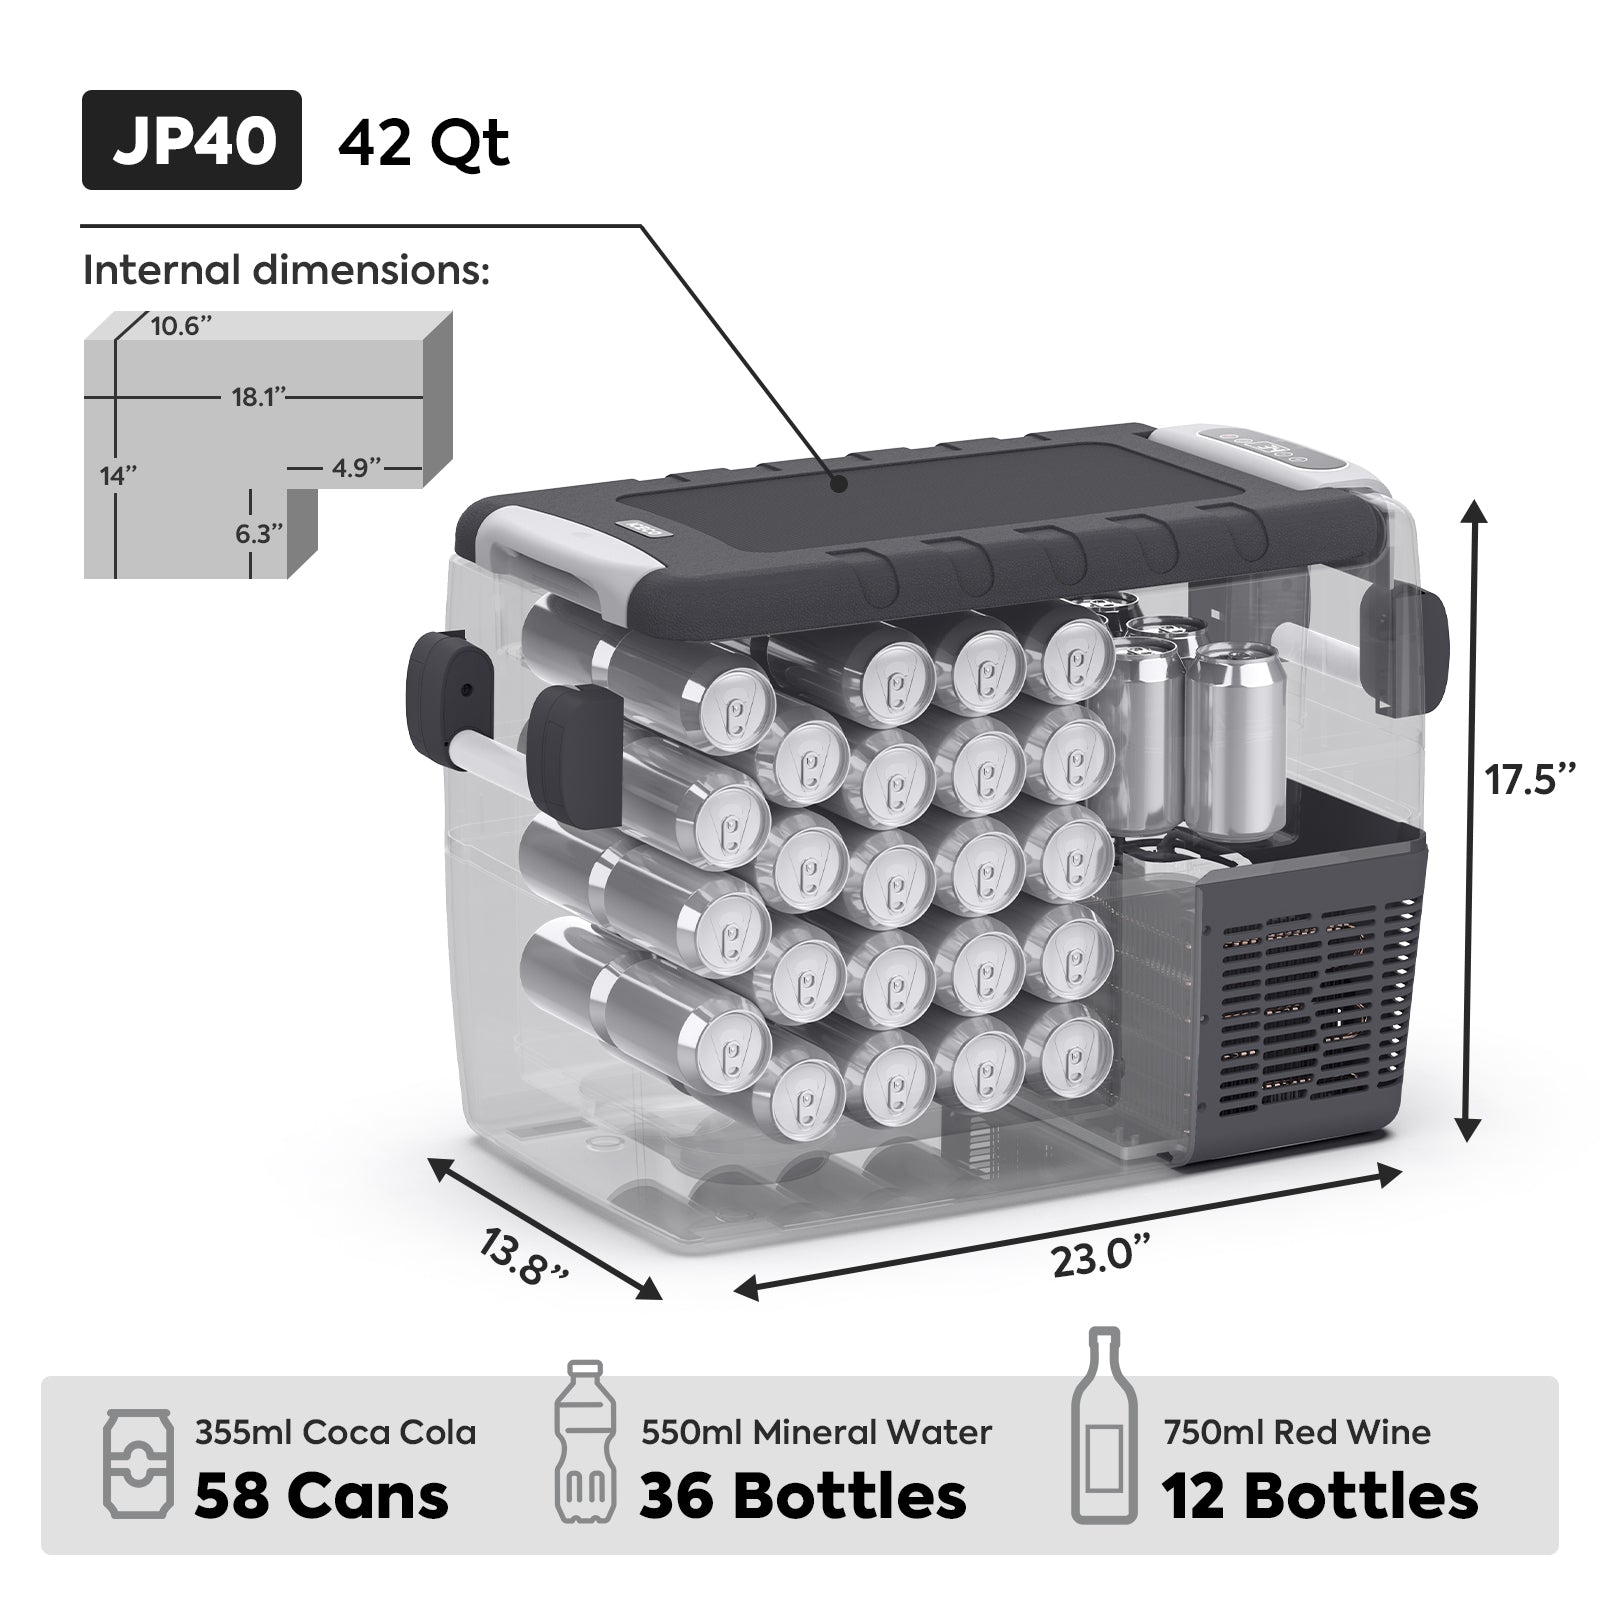 42QT JP40 12V APP Controlled Portable Freezer with Portable Power Station | ICECO-Portable Fridge-www.icecofreezer.com